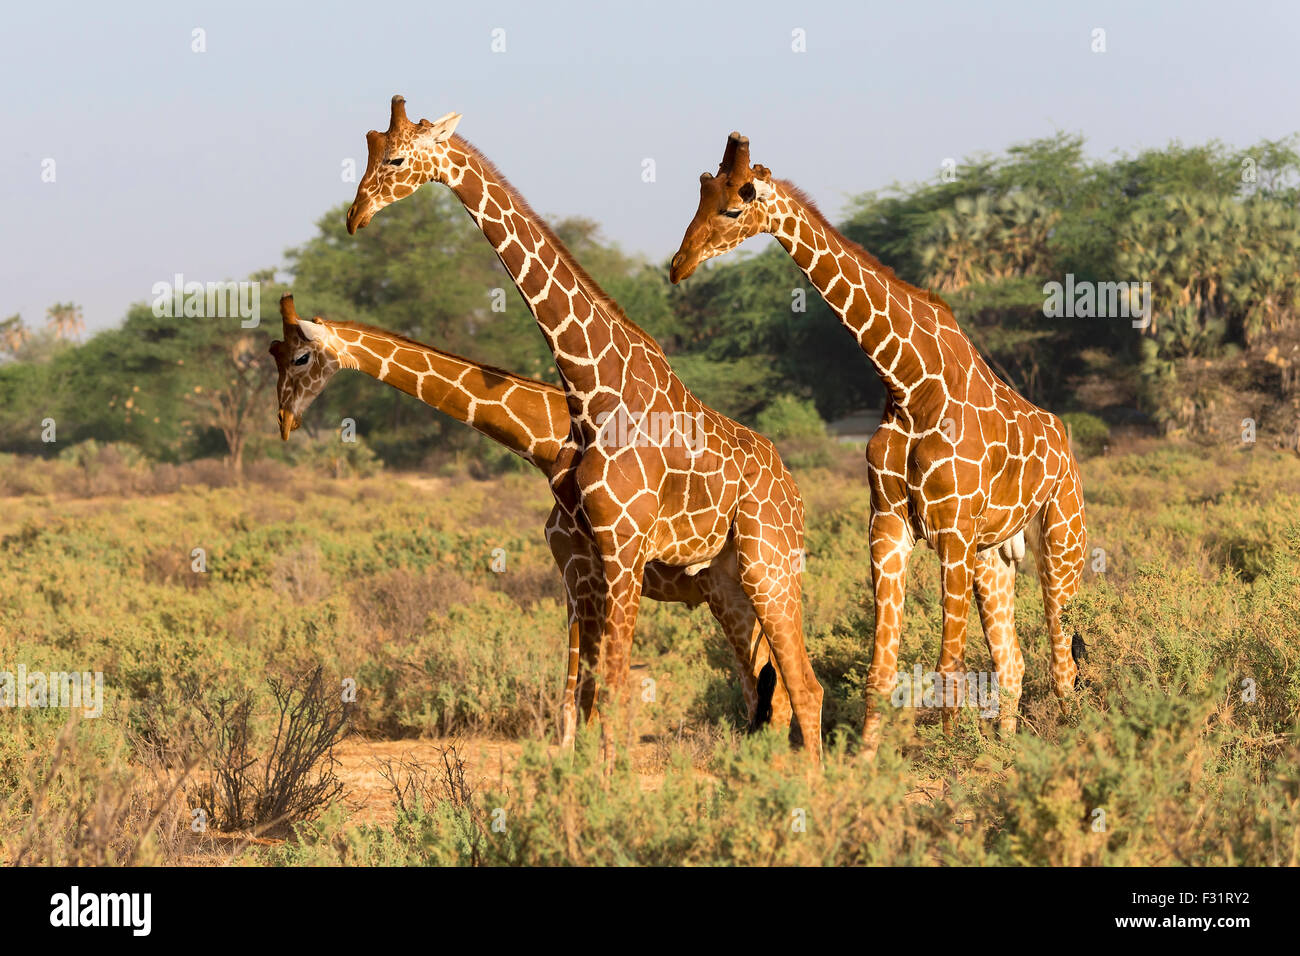 La girafe réticulée (Giraffa camelopardalis reticulata), Samburu National Reserve, Kenya Banque D'Images